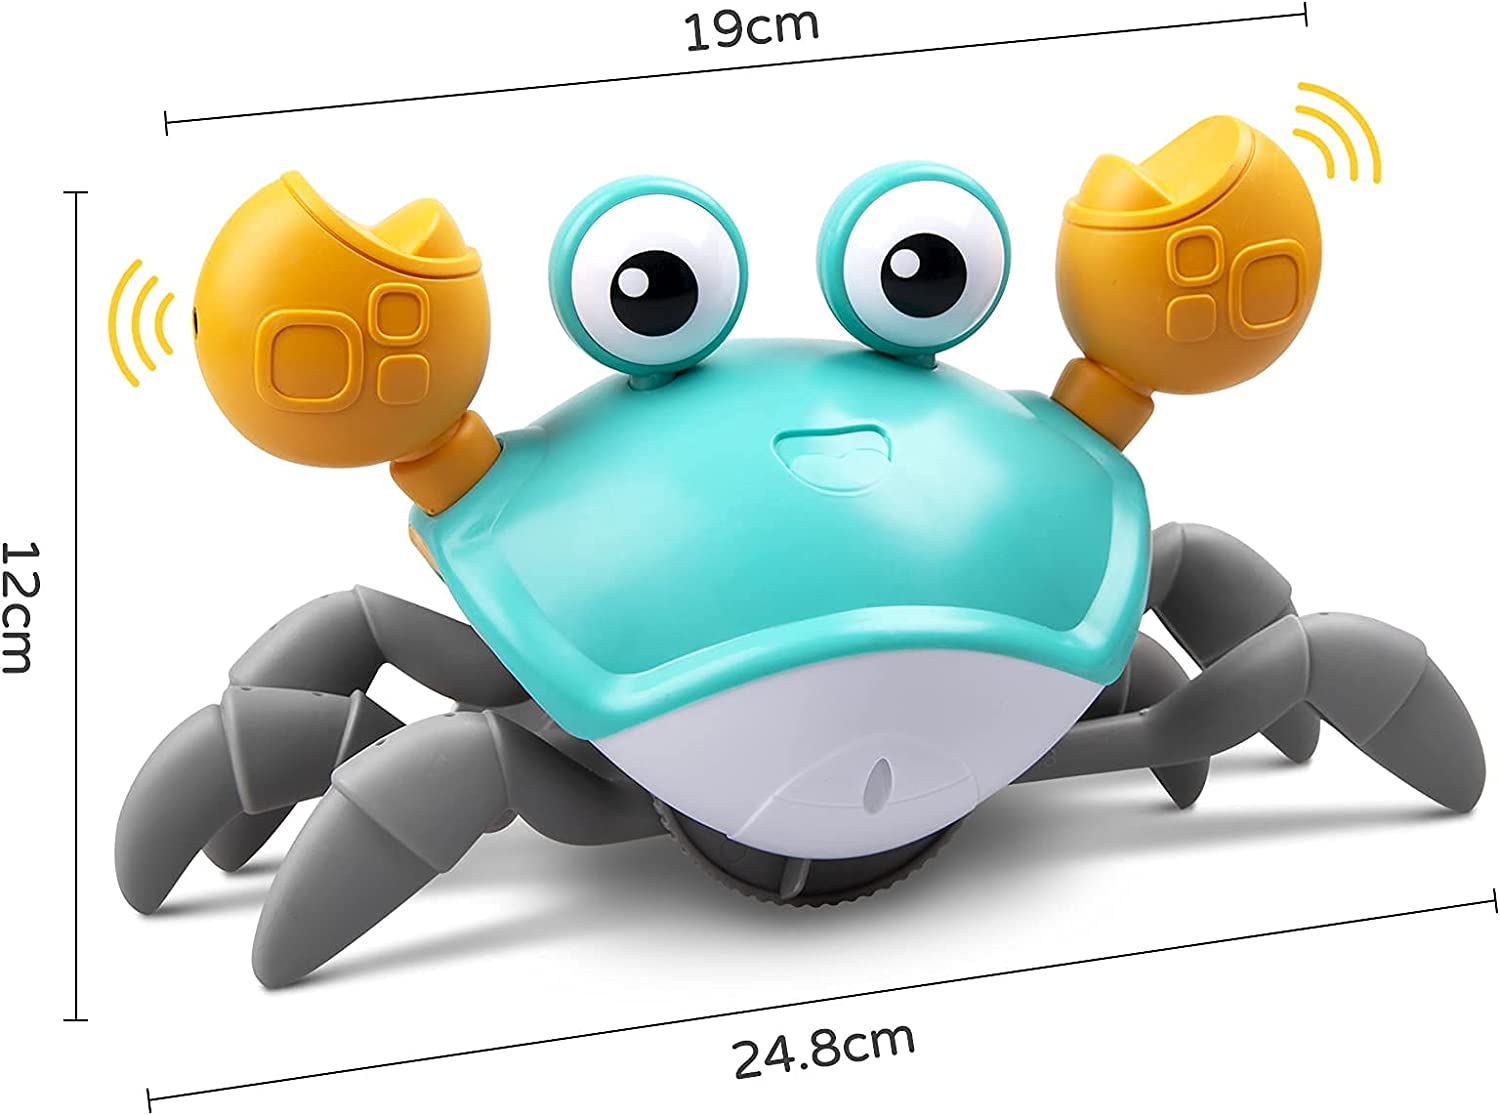 crawling crab helps with tummy timeiiokz